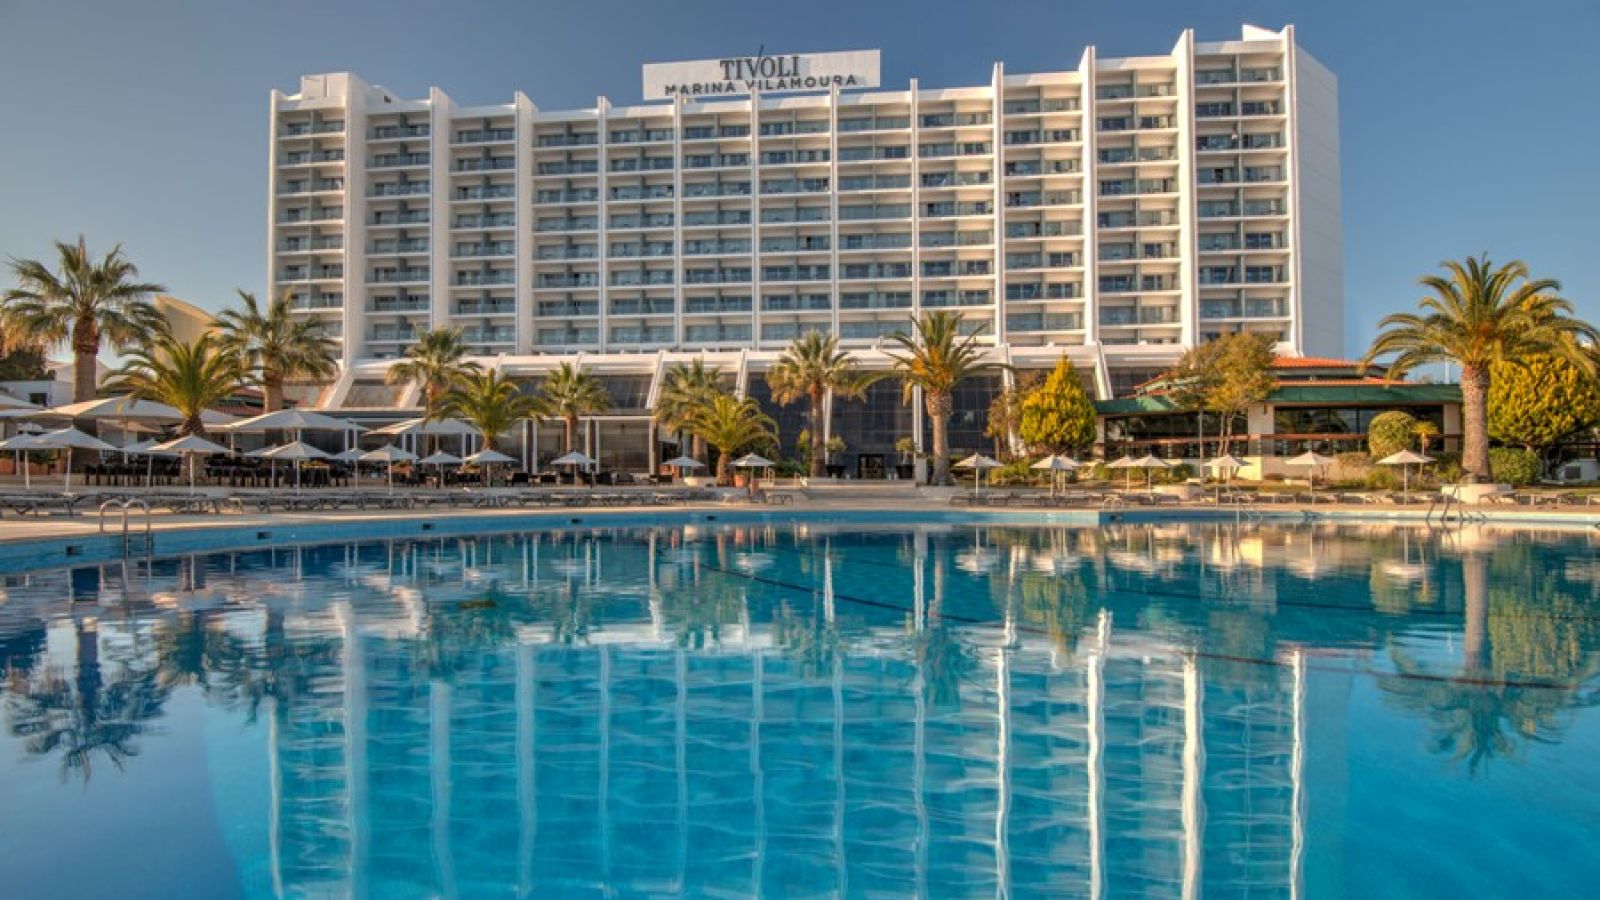 Tivoli Marina Hotel - Portugal golf packages